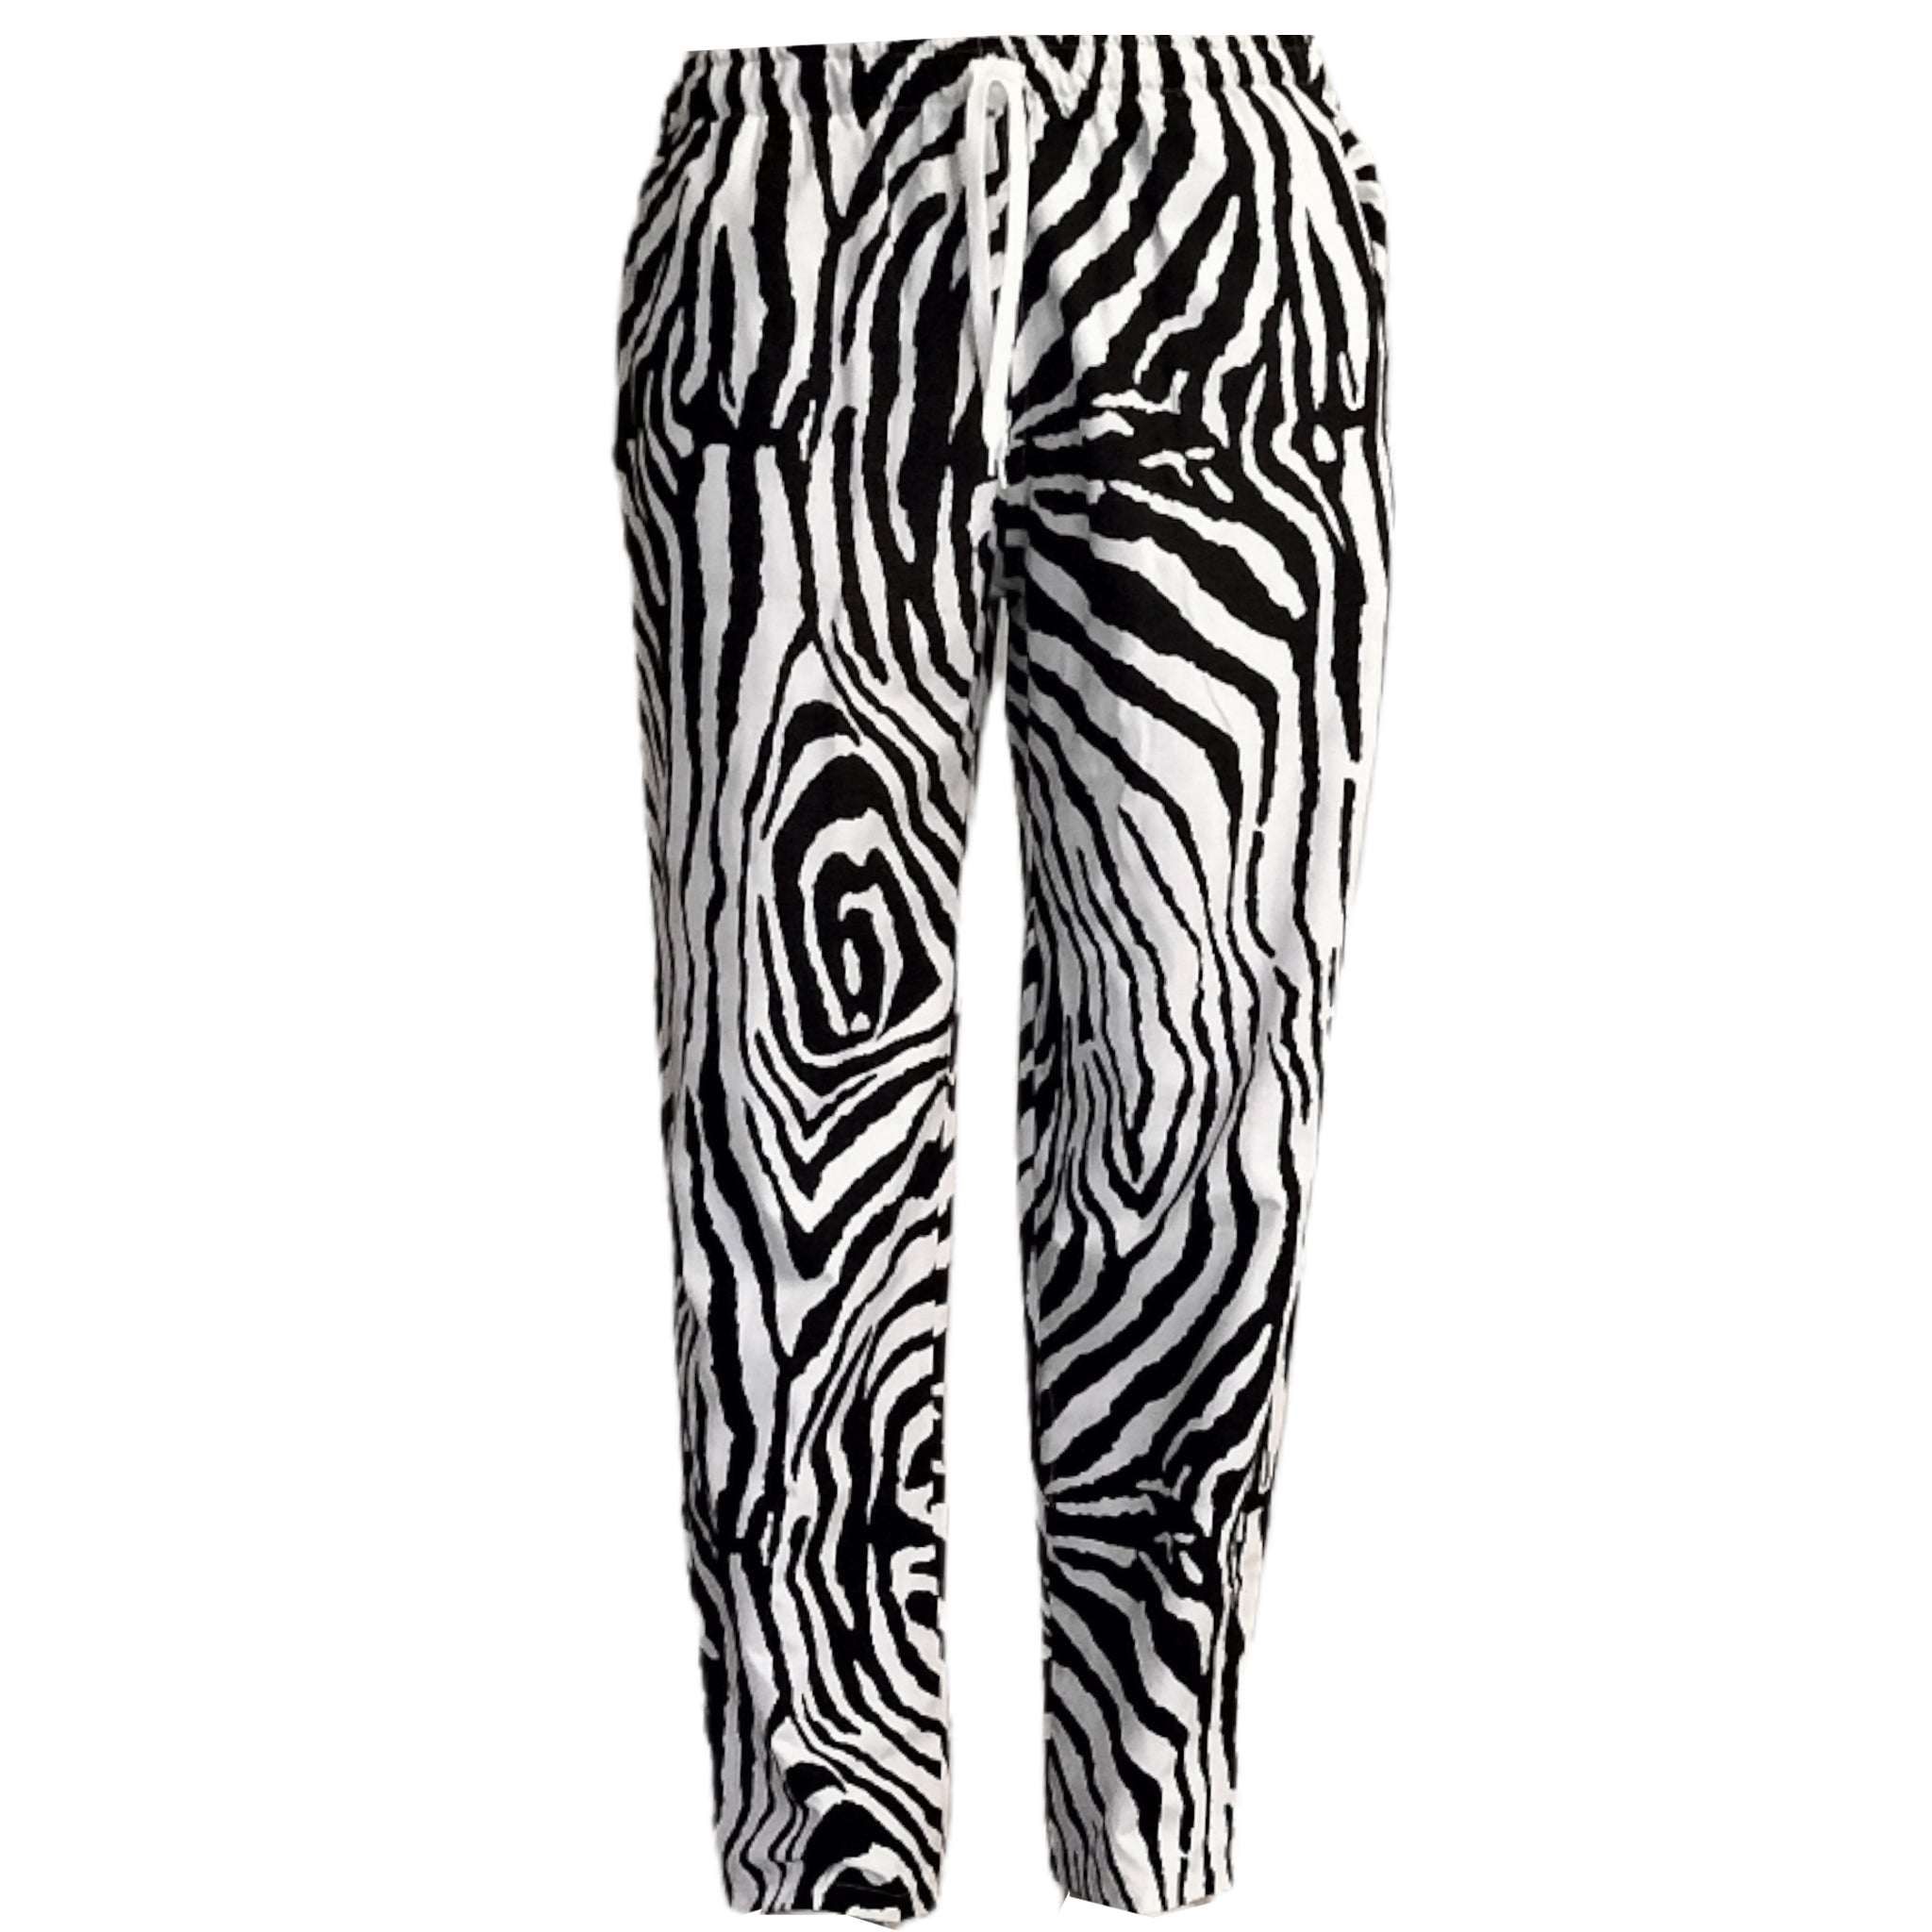 Medium Zebra Striped Magic Fuzzy Pants Black and White Stripes